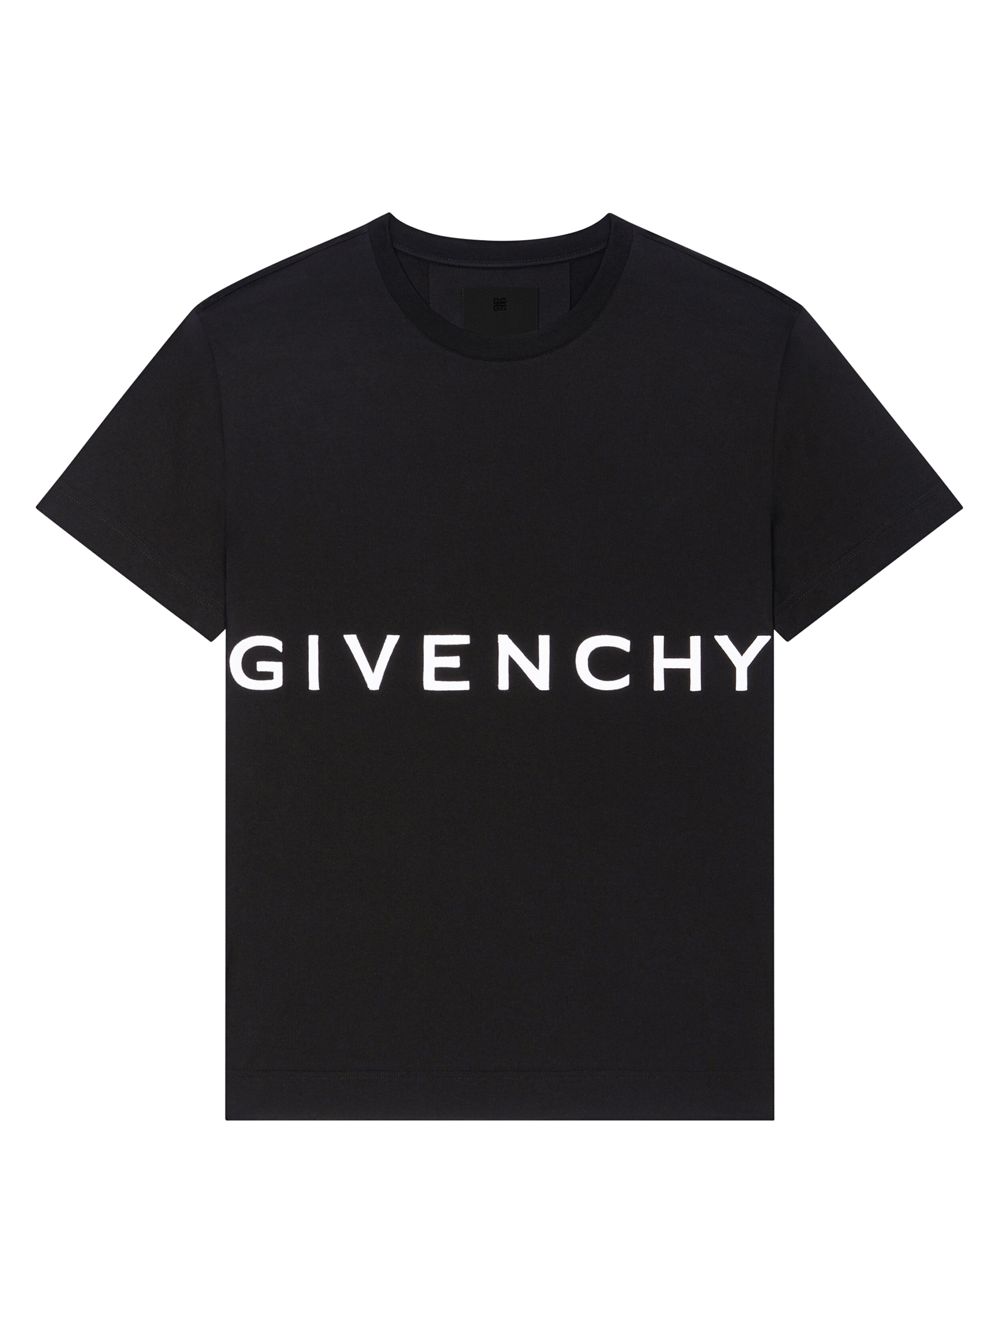 Футболка оверсайз из джерси с вышивкой Givenchy, черный кепка с вышивкой givenchy черный